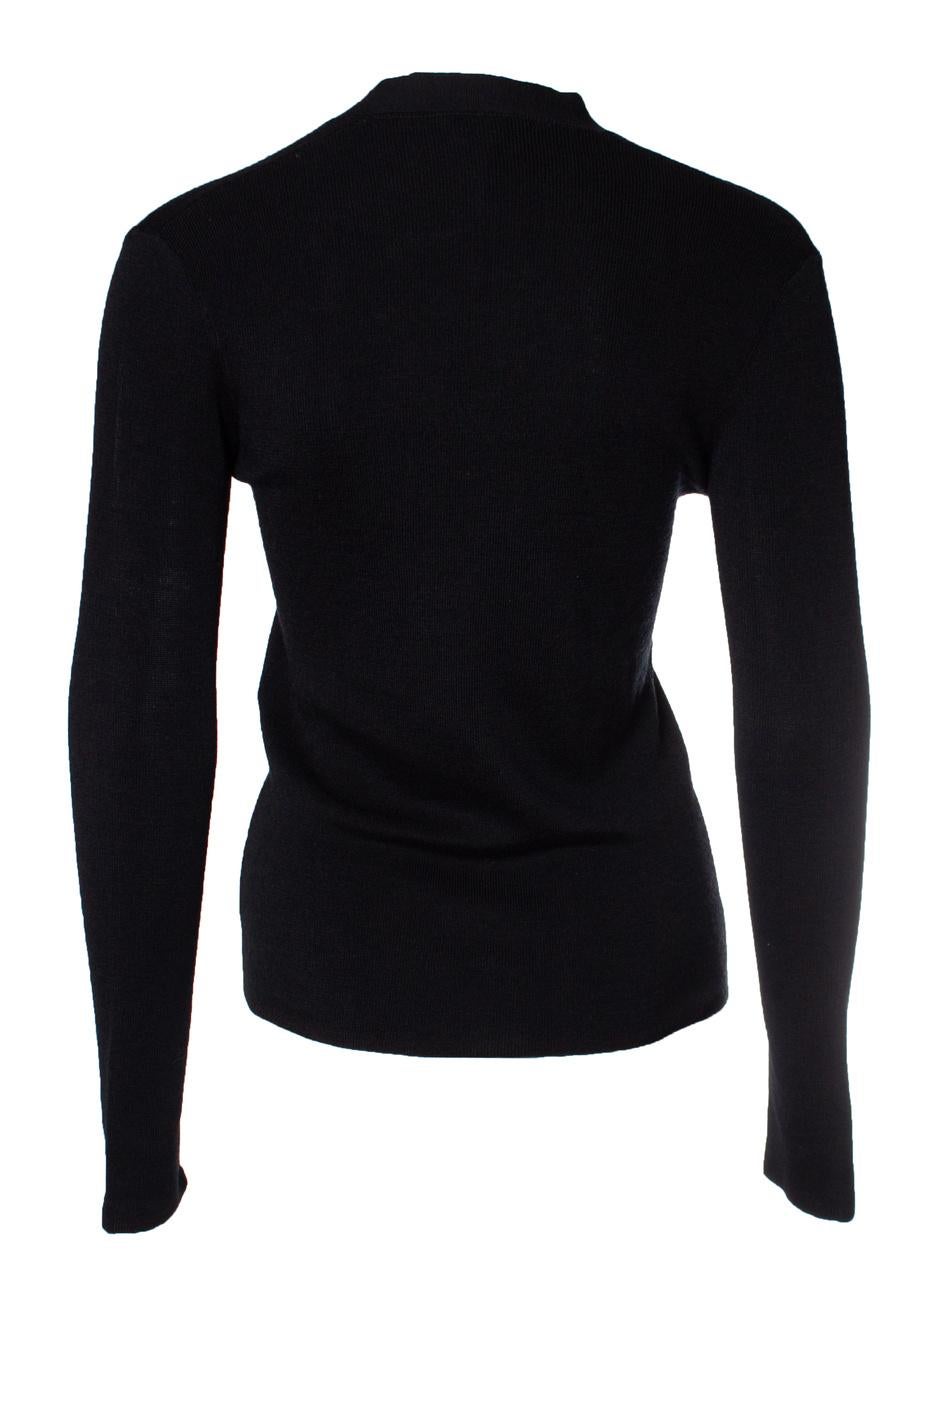 Fendi, Black cardigan In New Condition For Sale In AMSTERDAM, NL